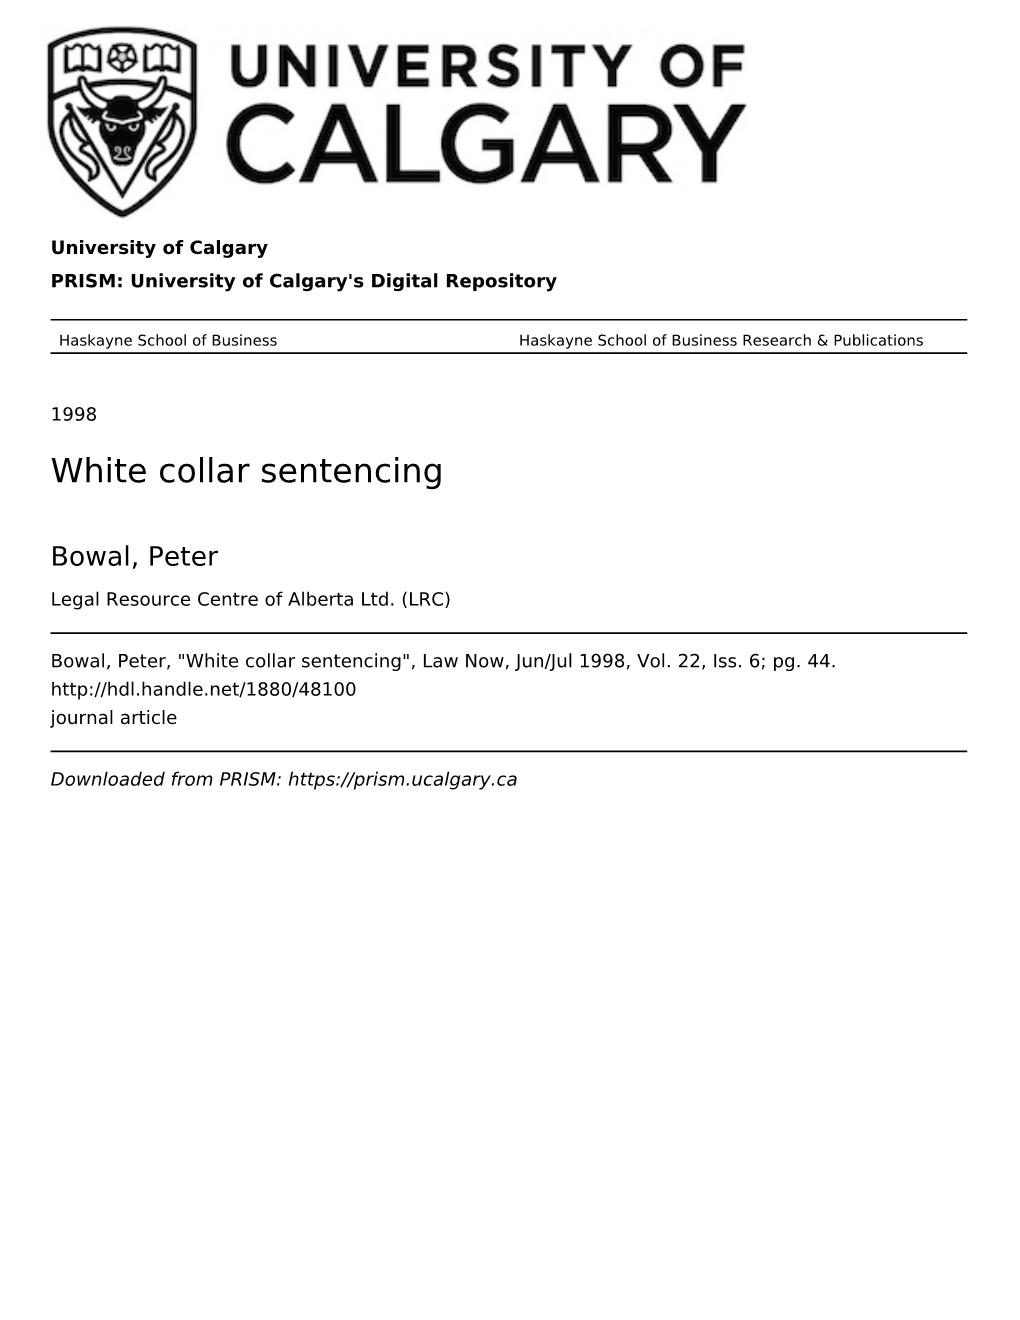 White Collar Sentencing